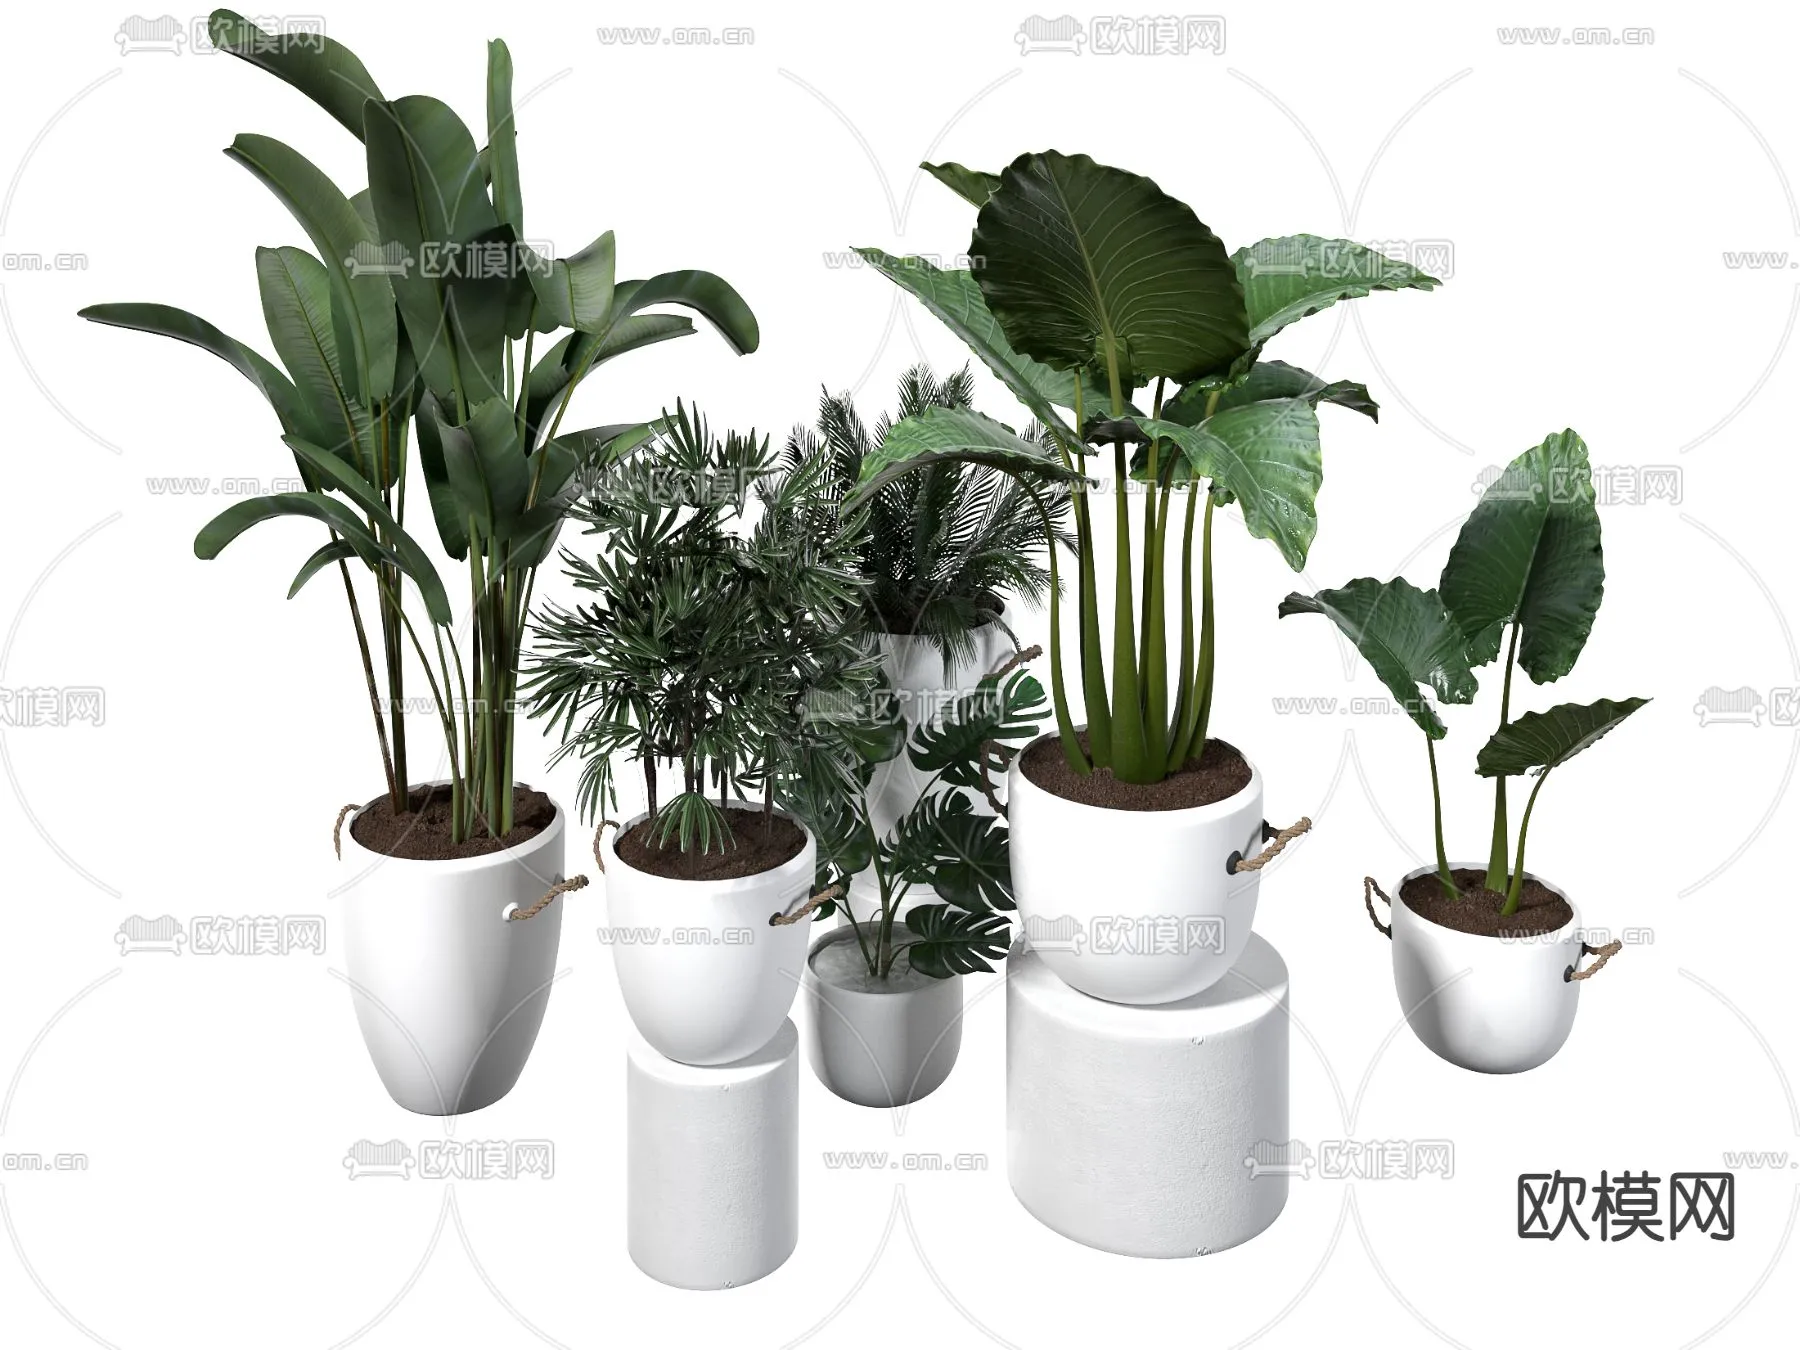 Plant – VRAY / CORONA – 3D MODEL – 464